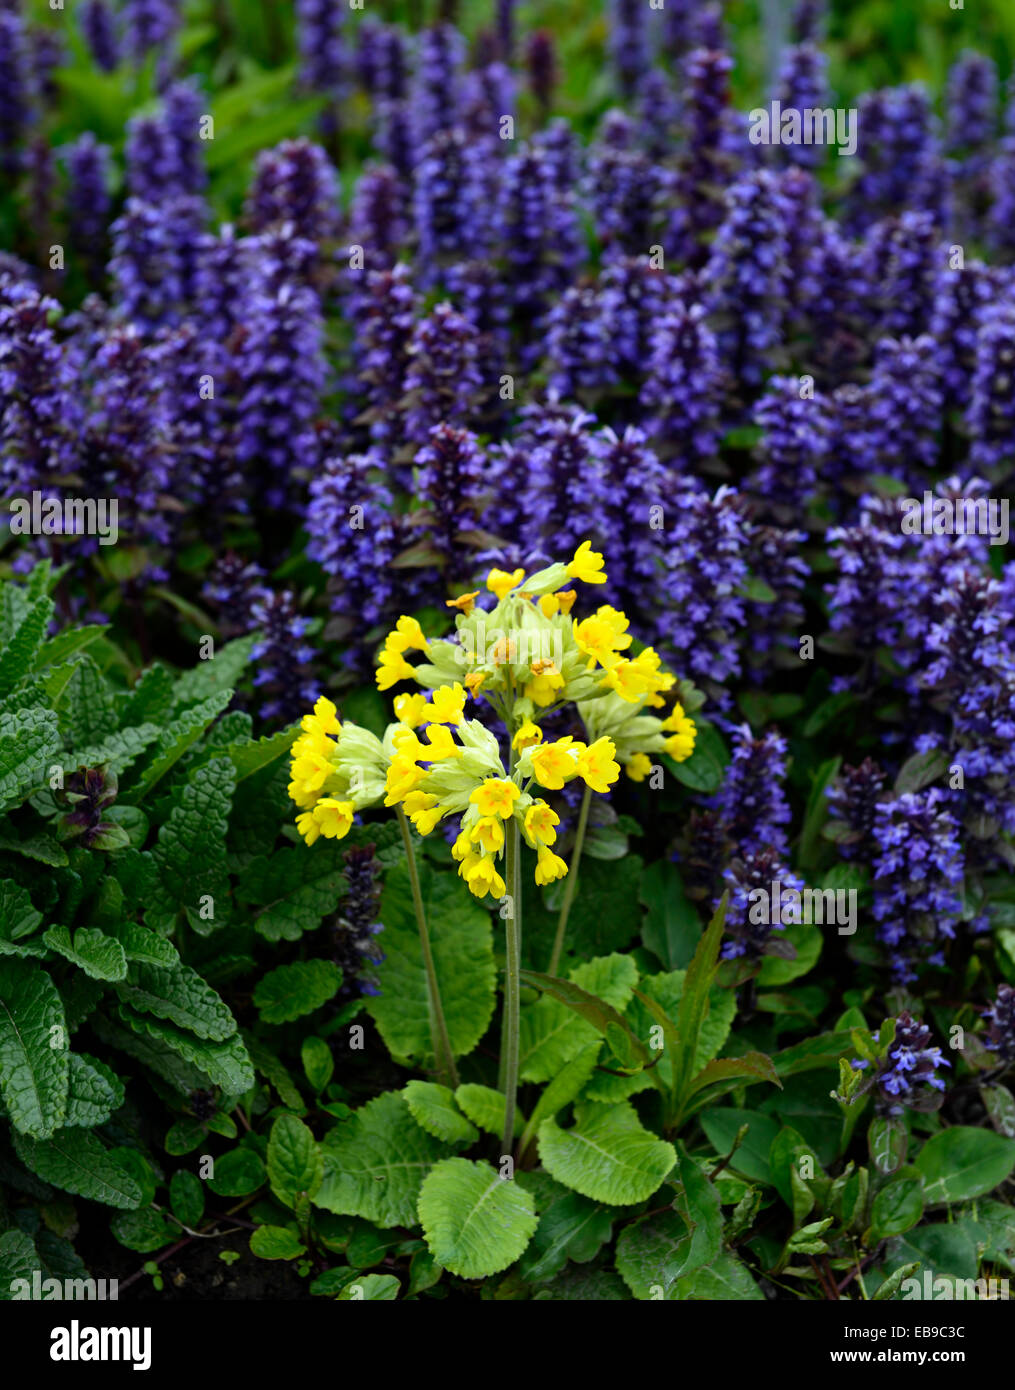 primula veris ajuga reptans cowslips bugleweed purple yellow flower flowers flowering planting combination scheme RM Floral Stock Photo